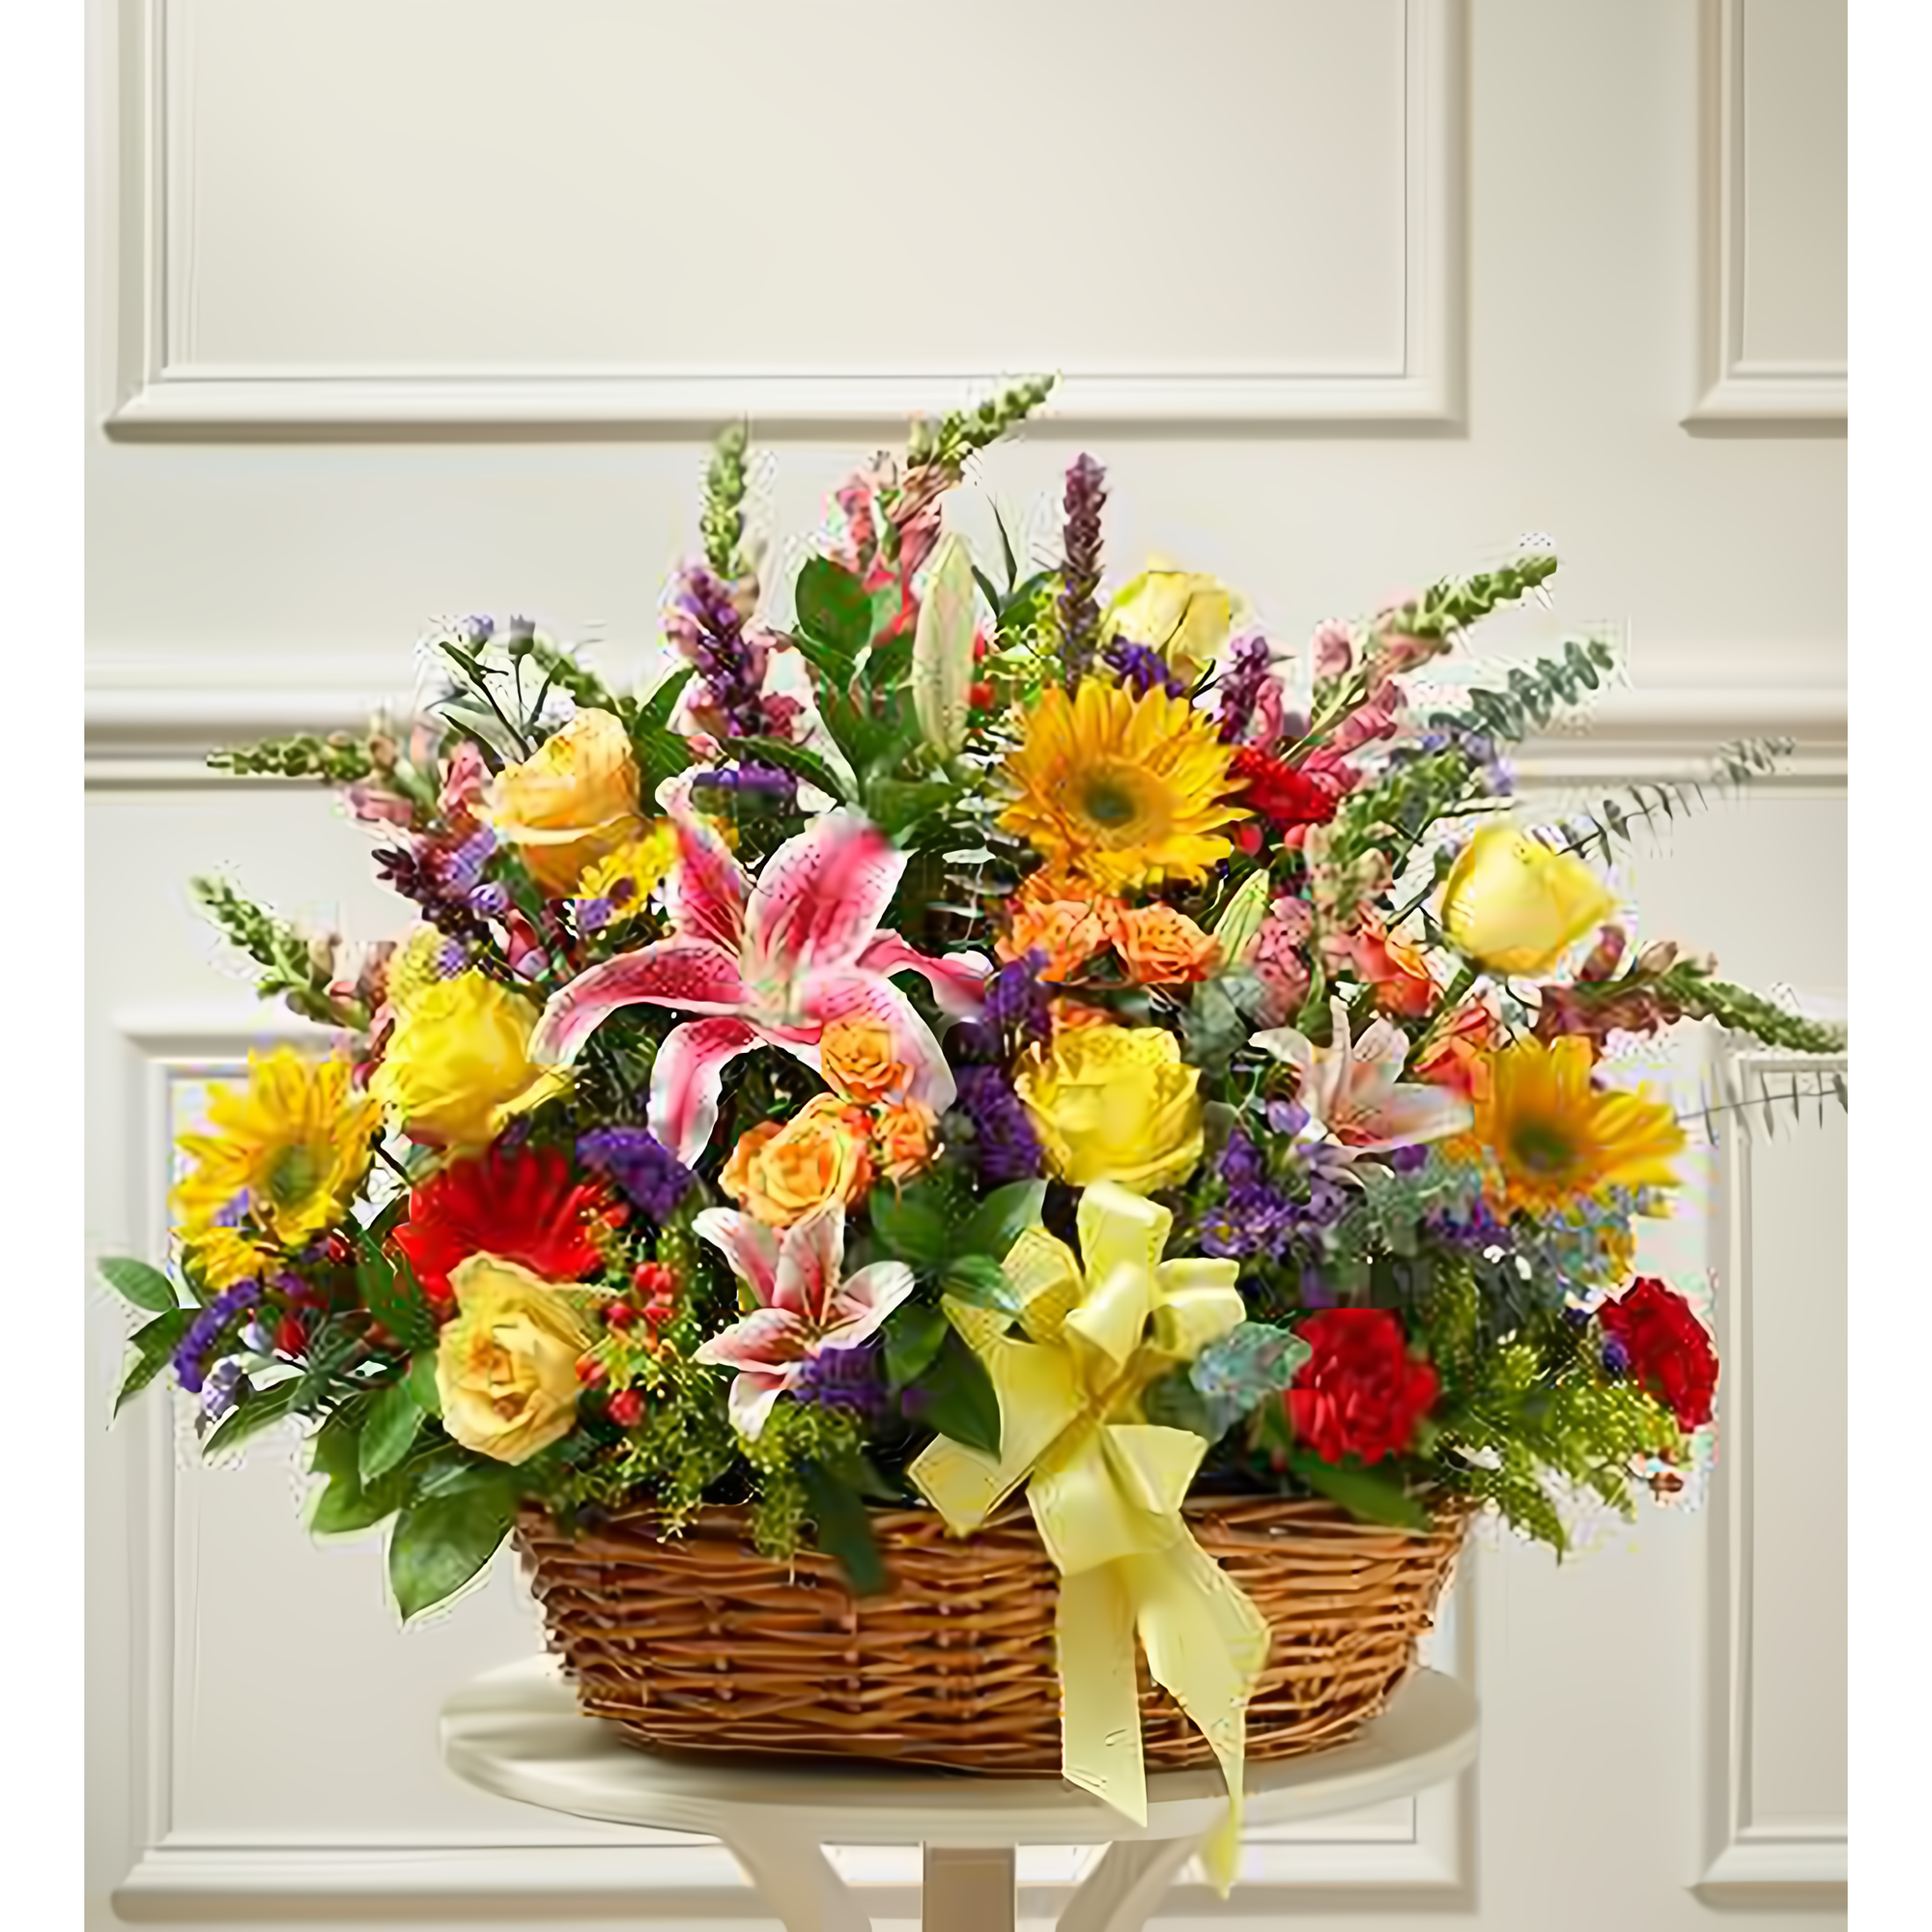 Manhattan Flower Delivery - Bright Flower Sympathy Arrangement in Basket - Funeral > For the Service